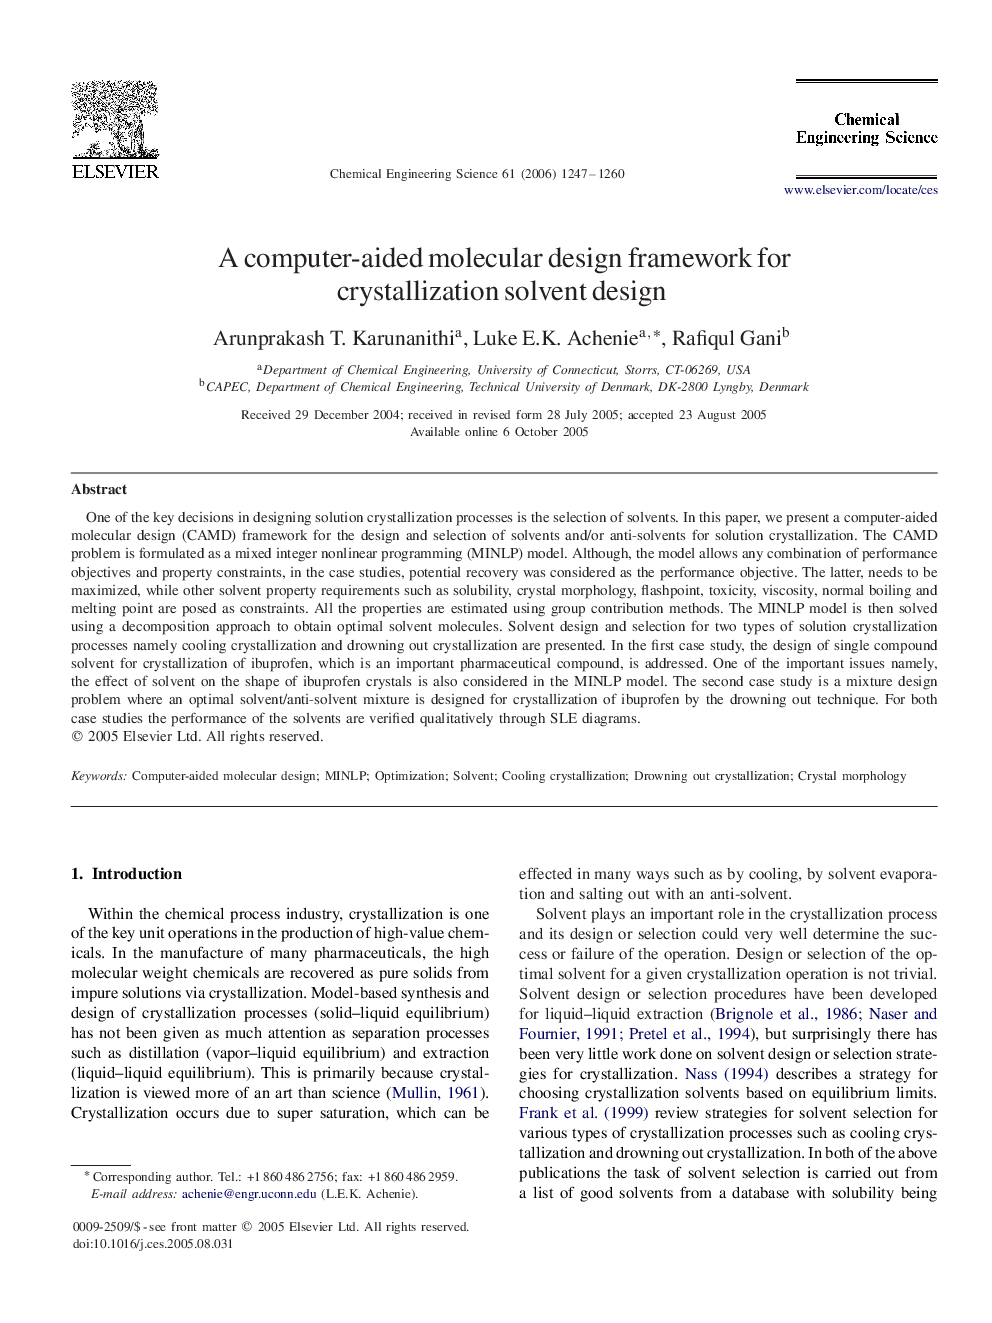 A computer-aided molecular design framework for crystallization solvent design